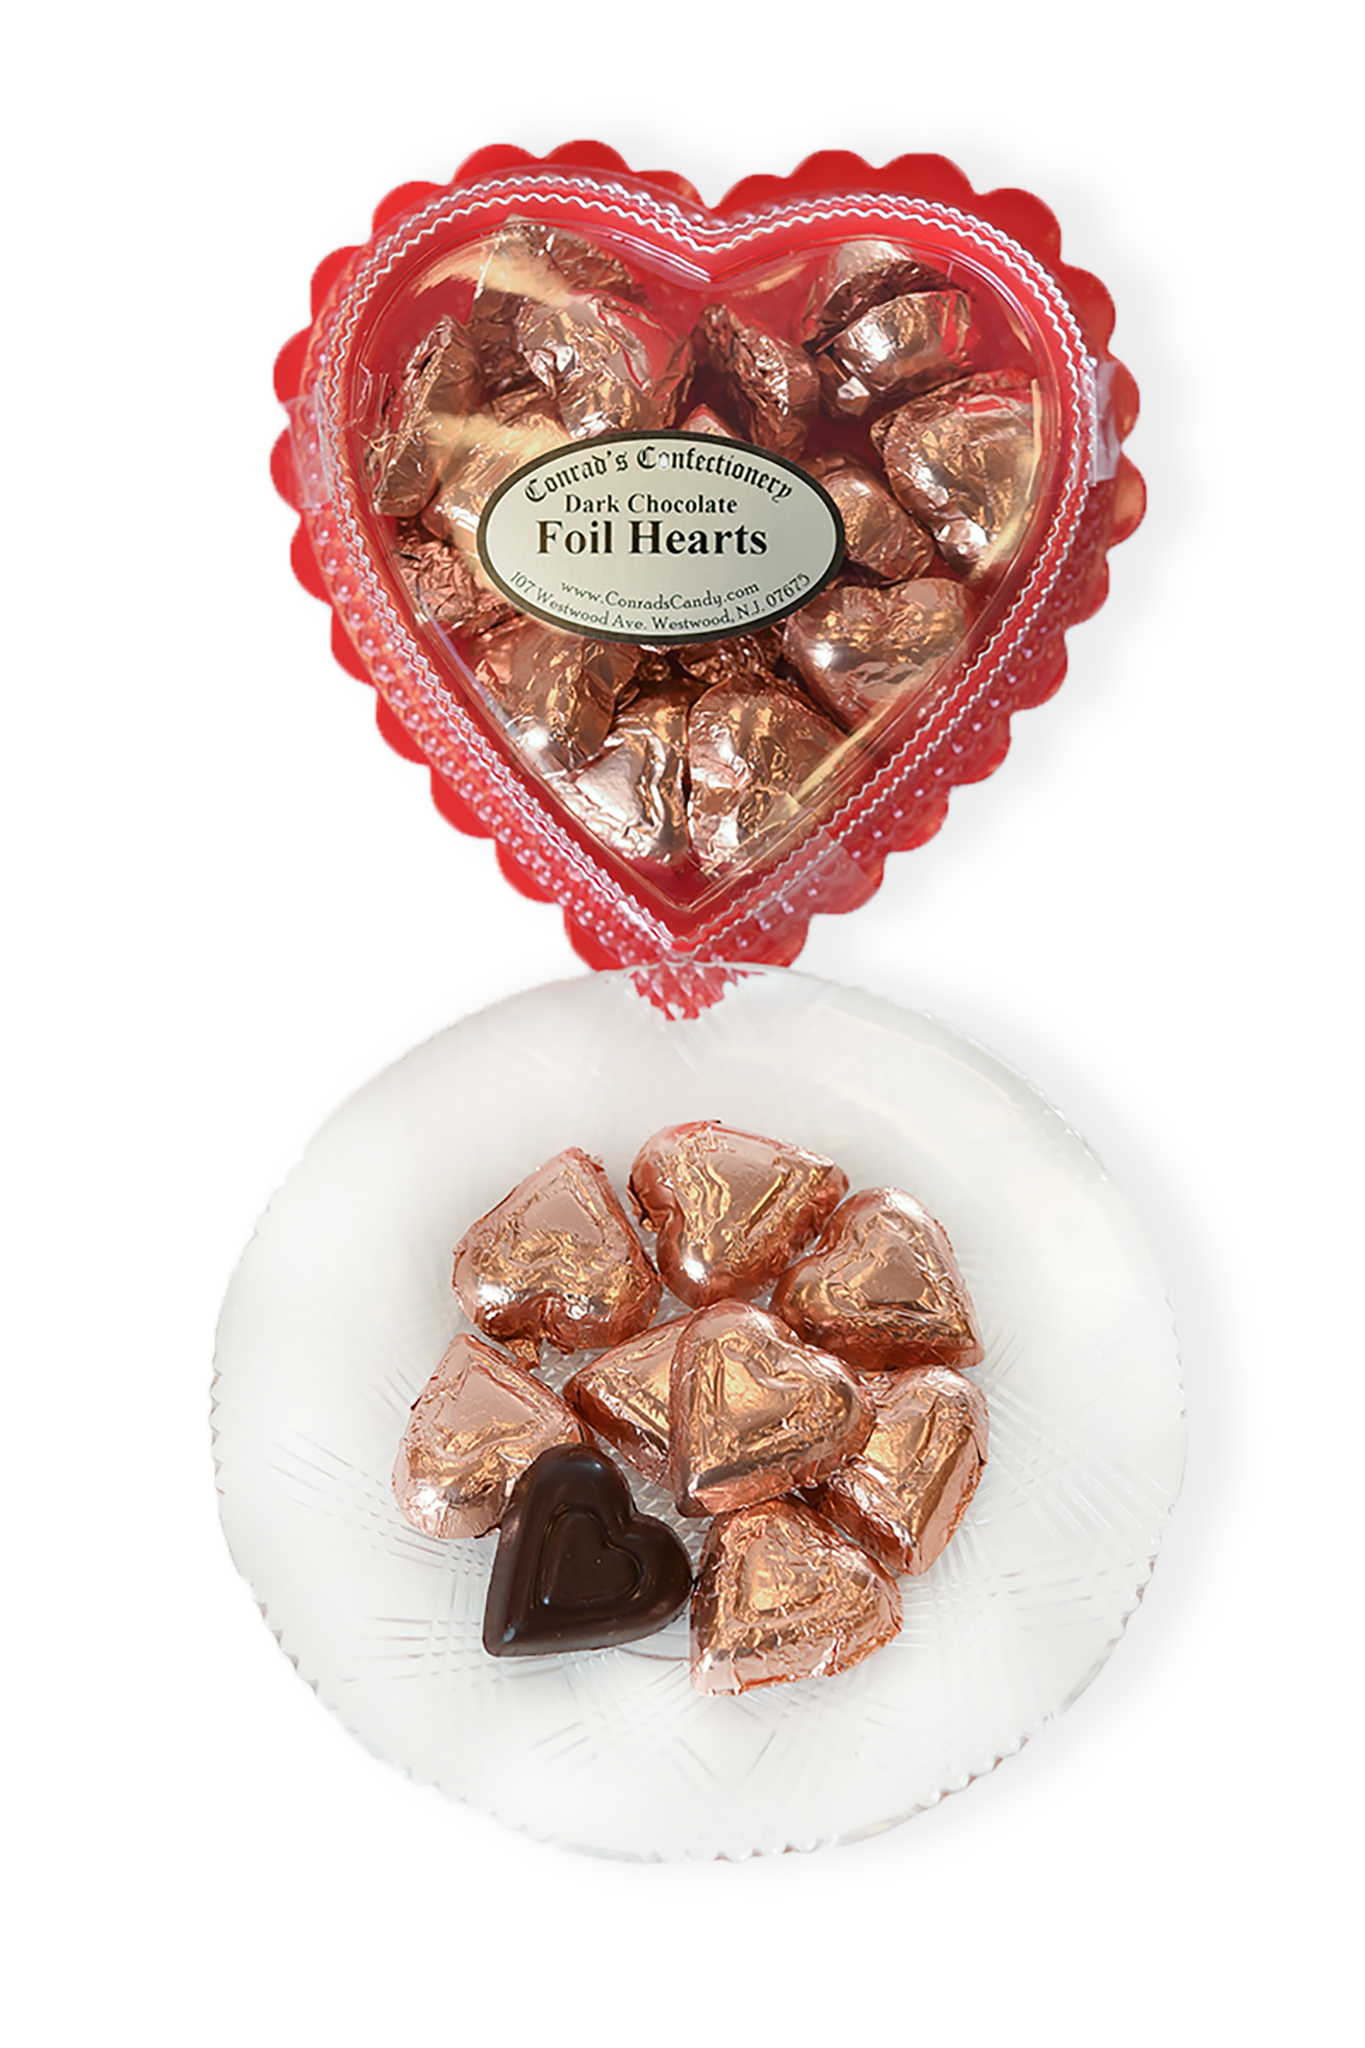 Happy Valentine's Day Chocolate Box – KANDY KORNER